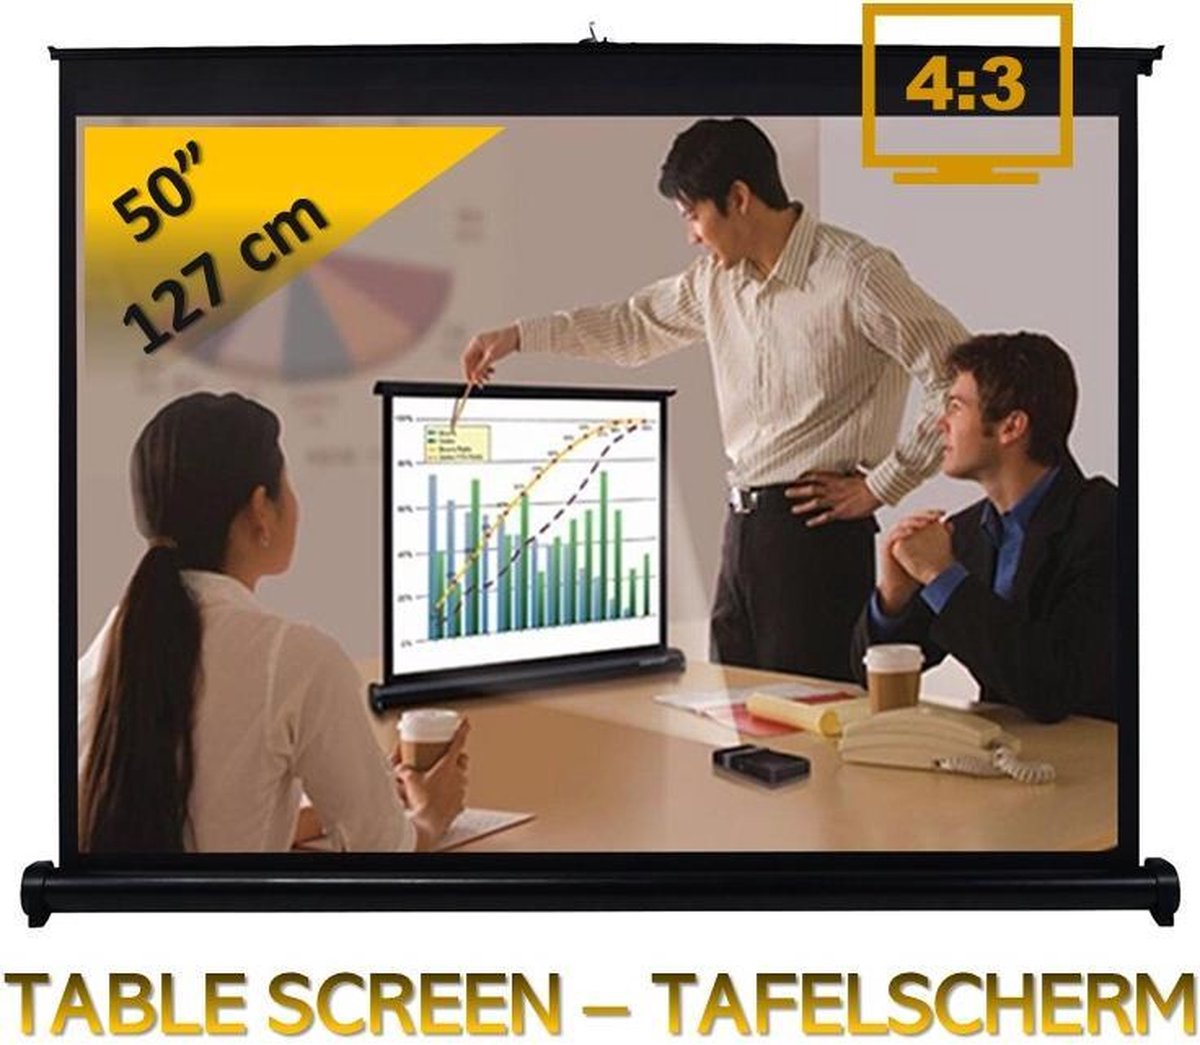 Tafelscherm 50" - 127cm (diagonaal) - 4:3 - beamer/projectie scherm | bol